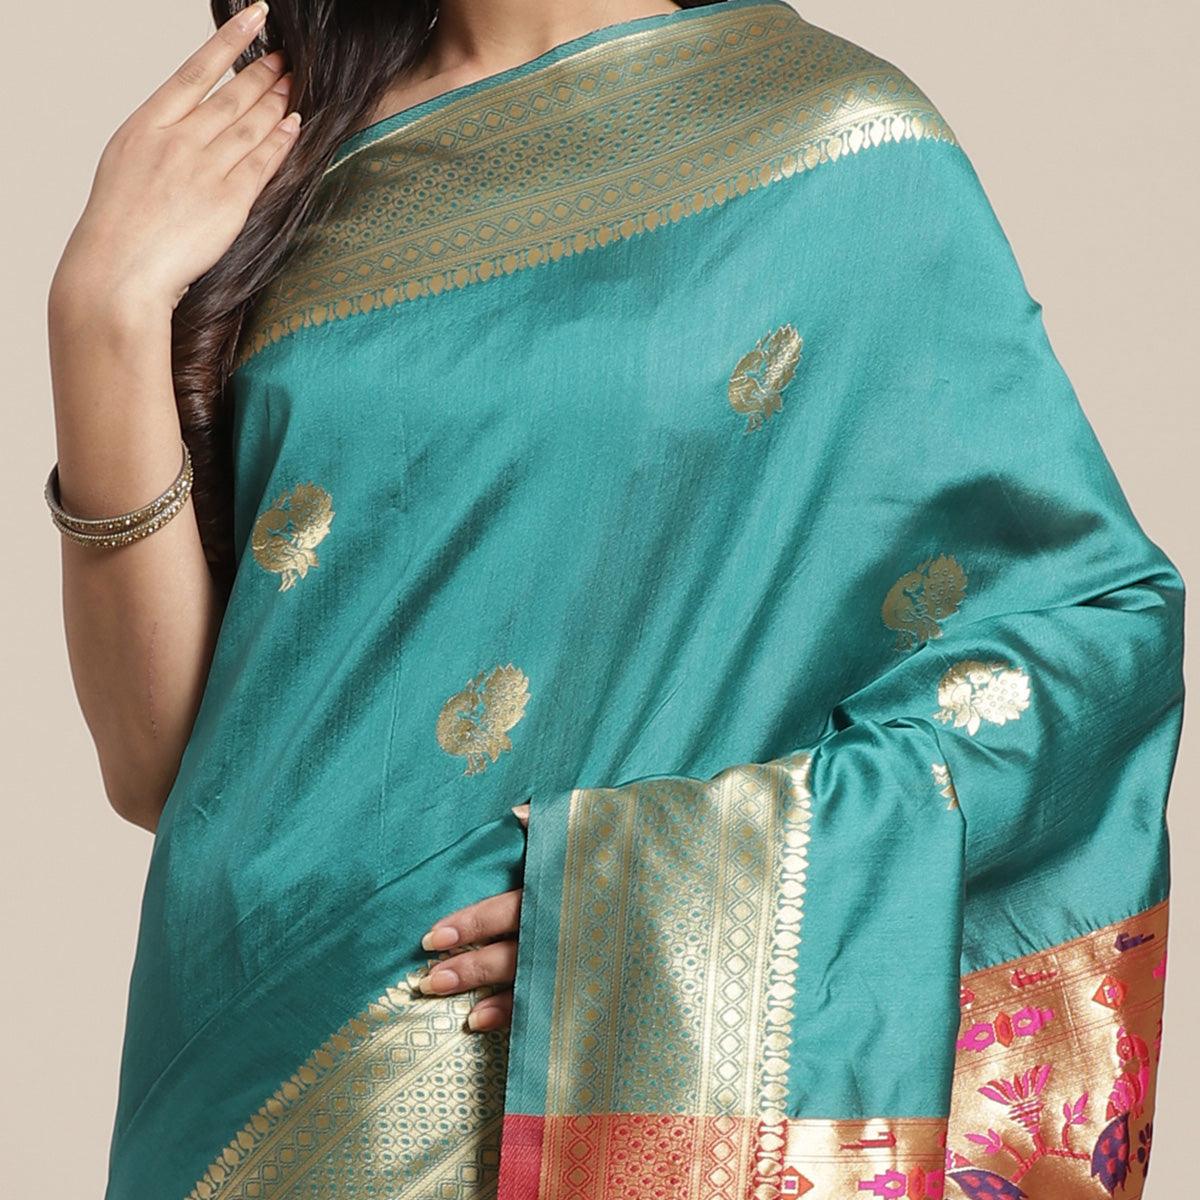 Ideal Rama Green Colored Festive Wear Woven Silk Blend Saree - Peachmode